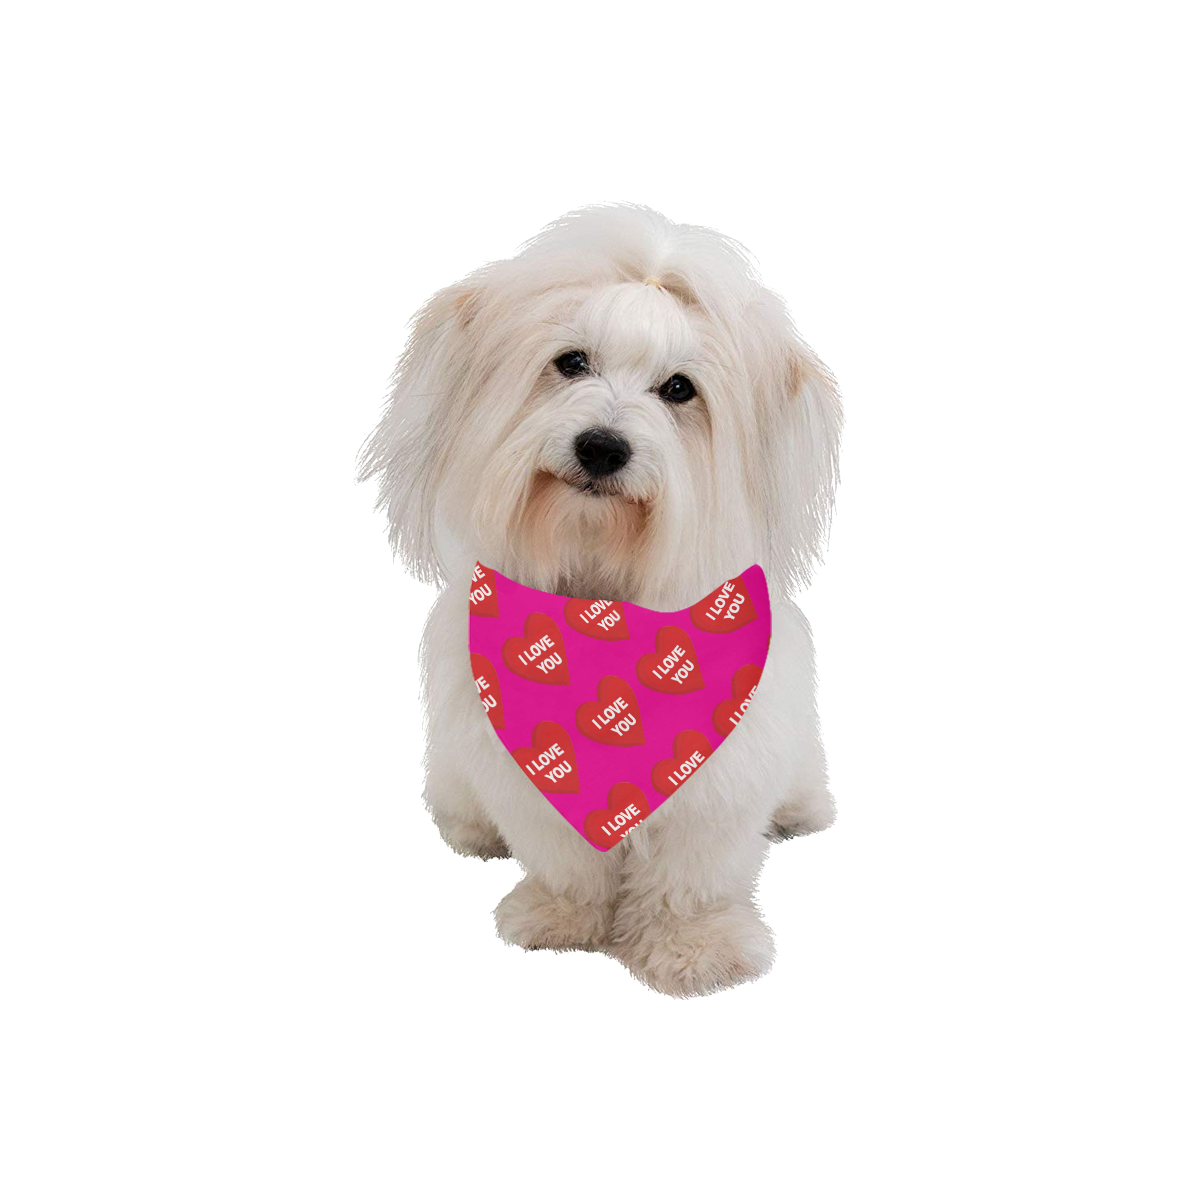 I love you in heart - PINK Pet Dog Bandana/Large Size